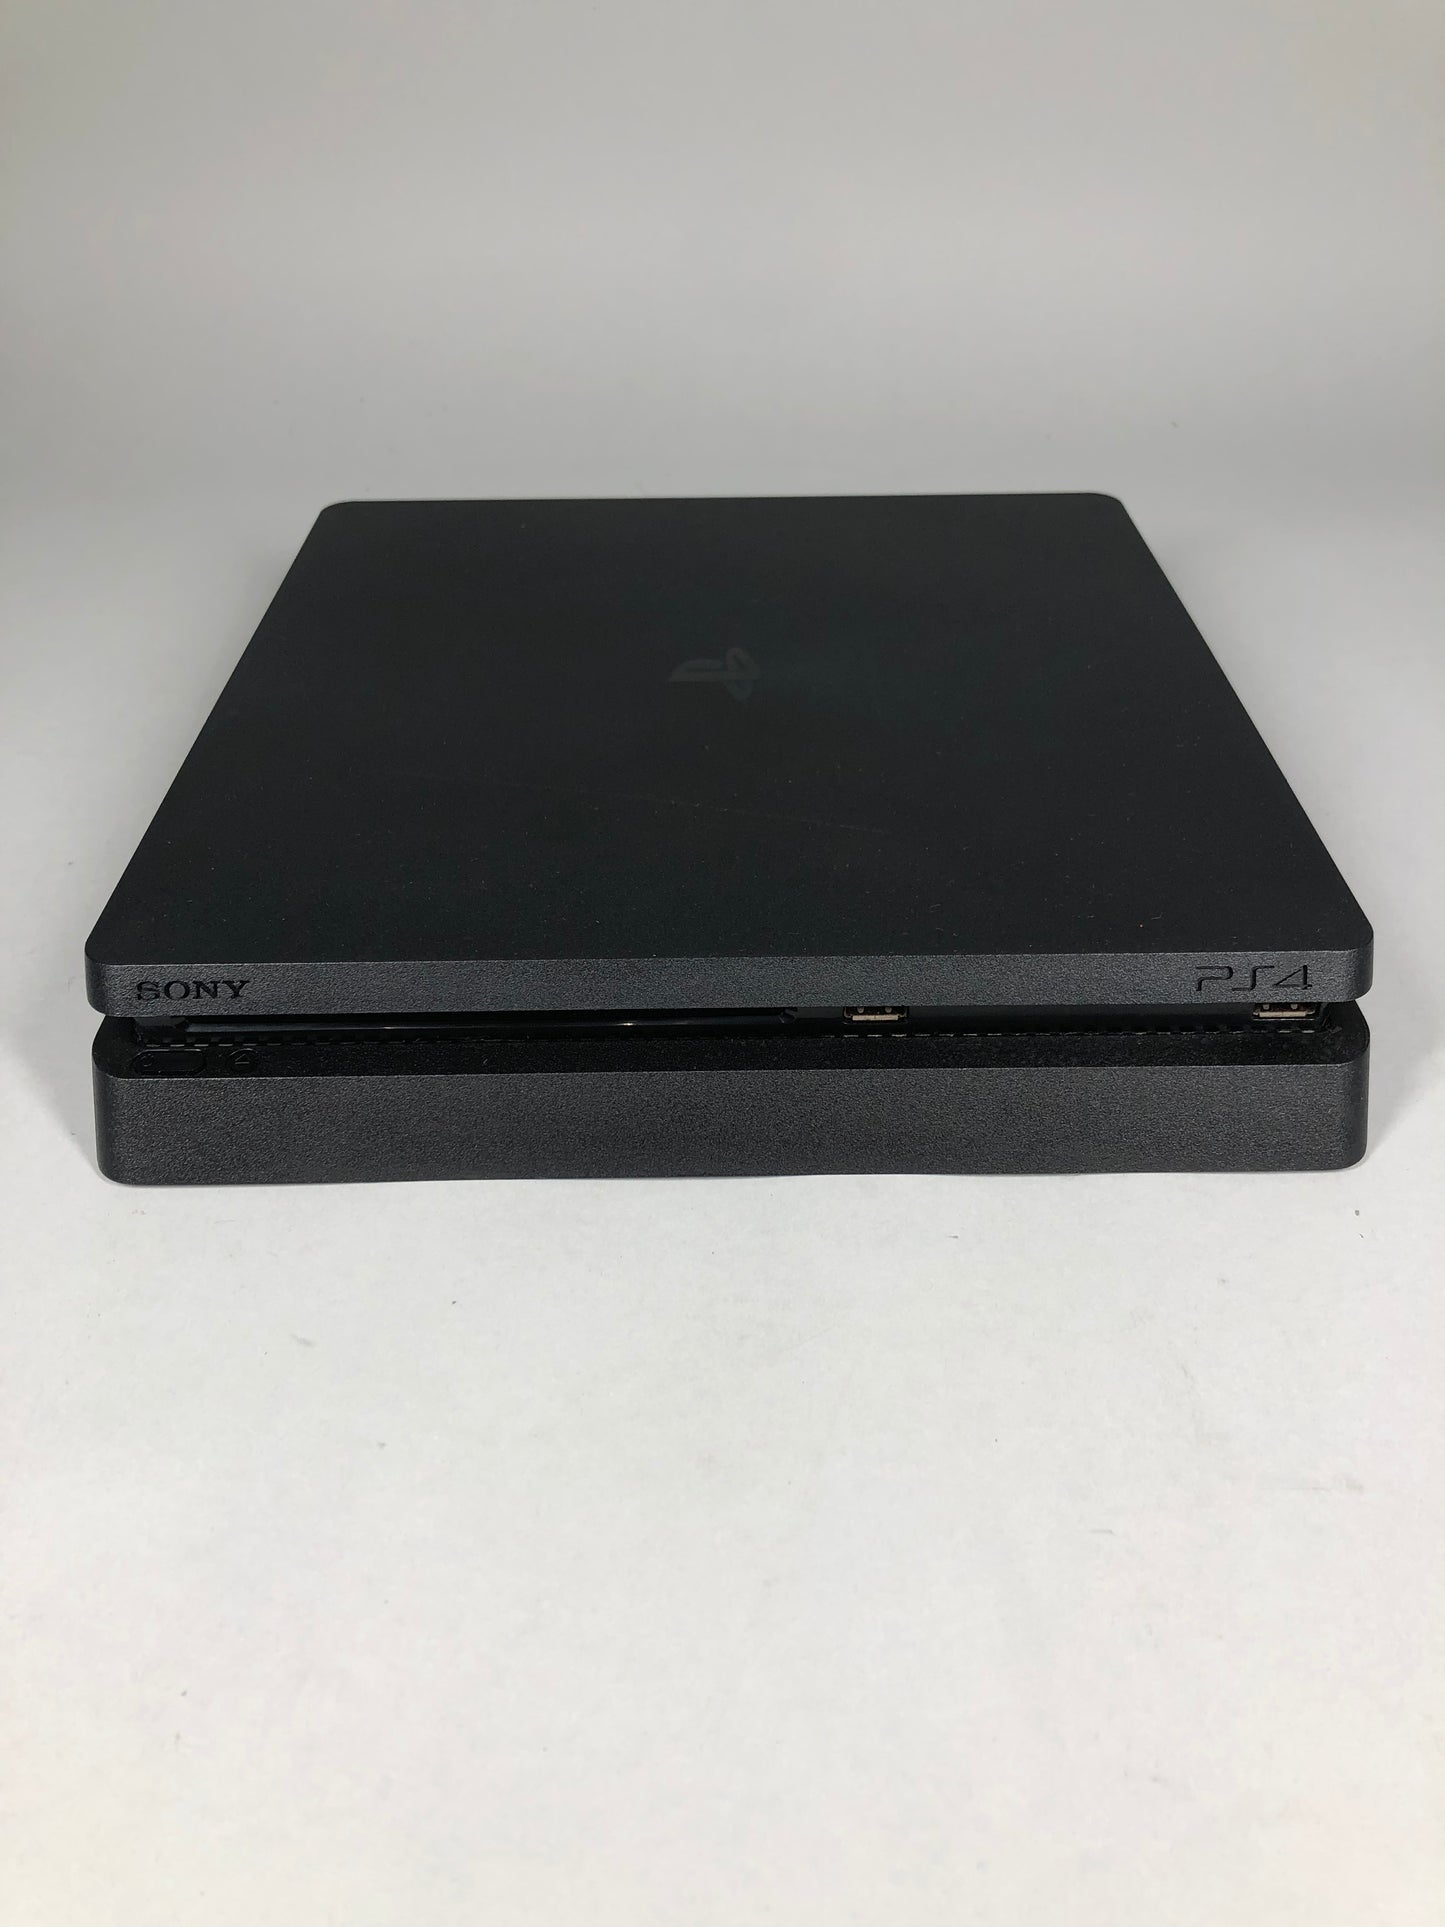 Sony PlayStation 4 Slim PS4 500GB Black Console Gaming System CUH-2215A